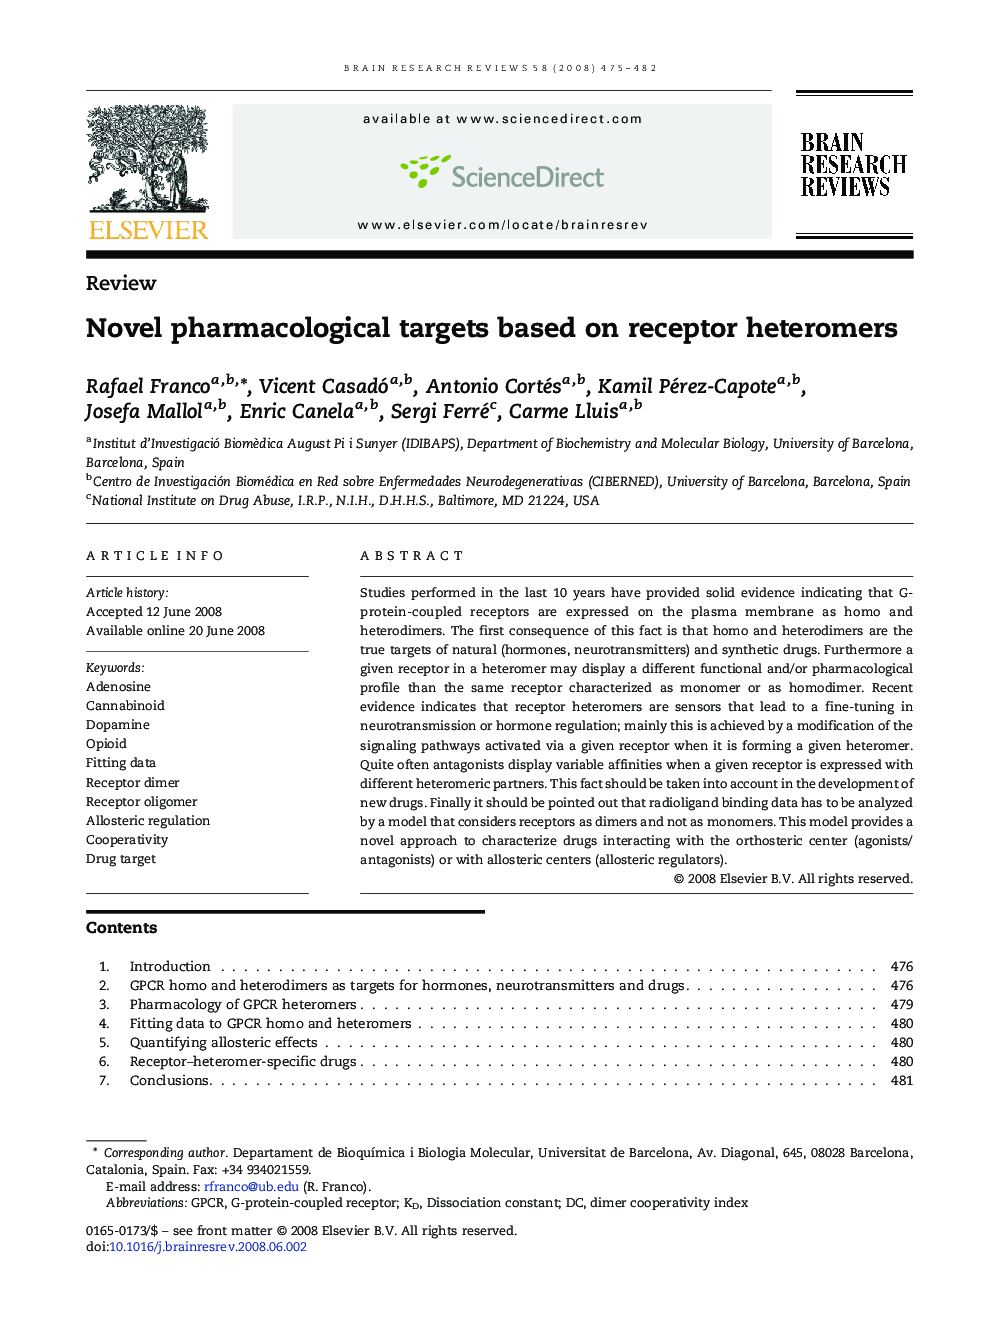 Novel pharmacological targets based on receptor heteromers